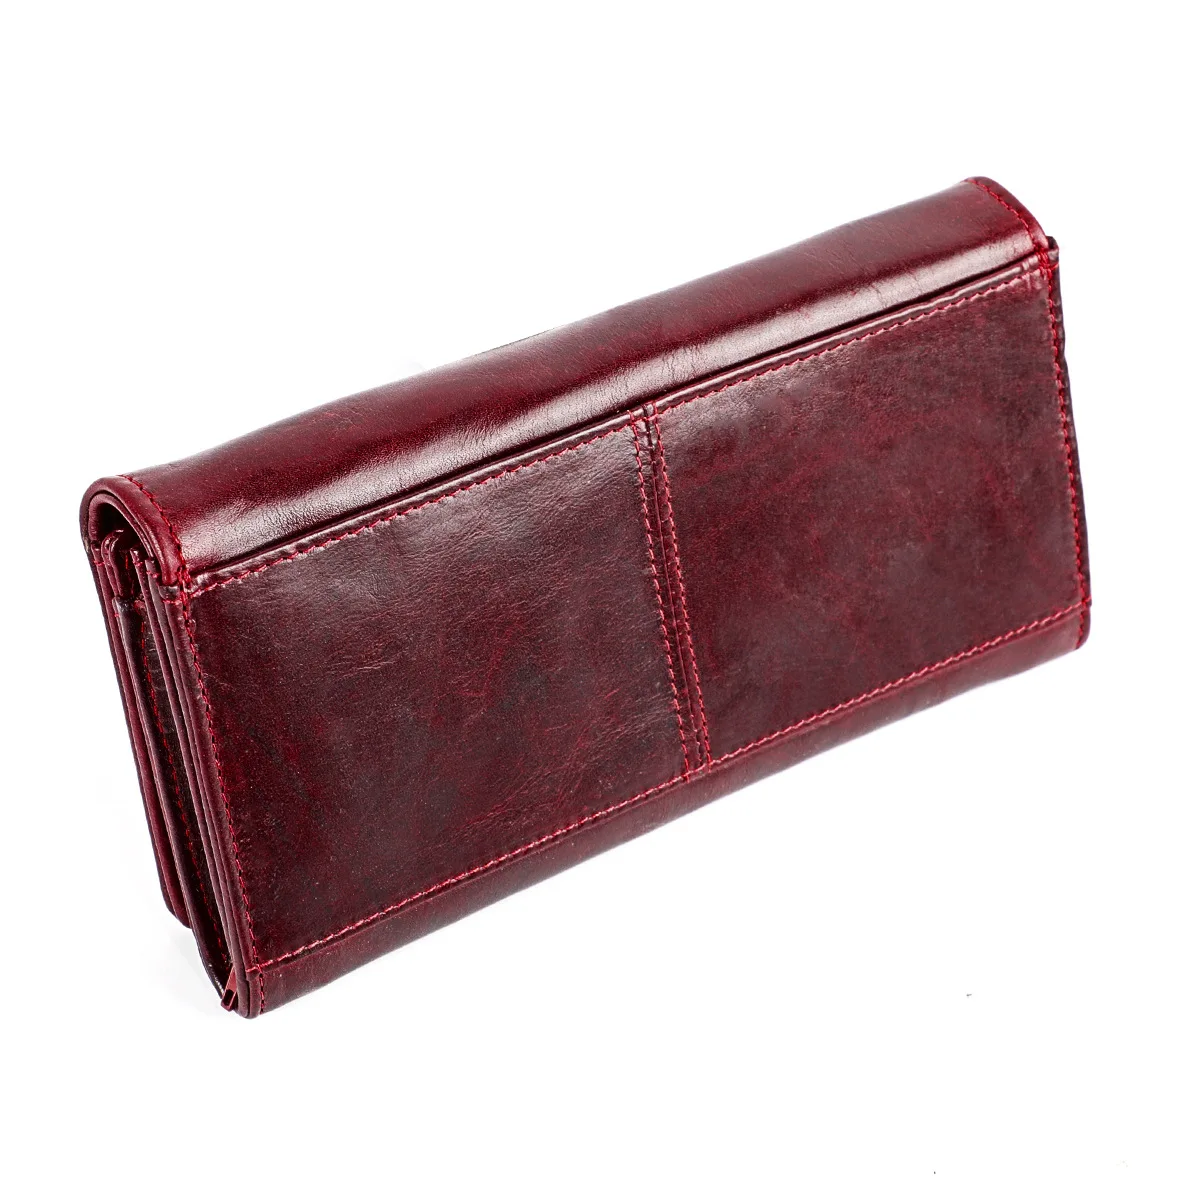 

BONAMIE 2019 Luxury Women Wallets RFID Genuine Leather High Quality Clutch Long Cowhide Wallet Zipper Fashion Female Purse Red